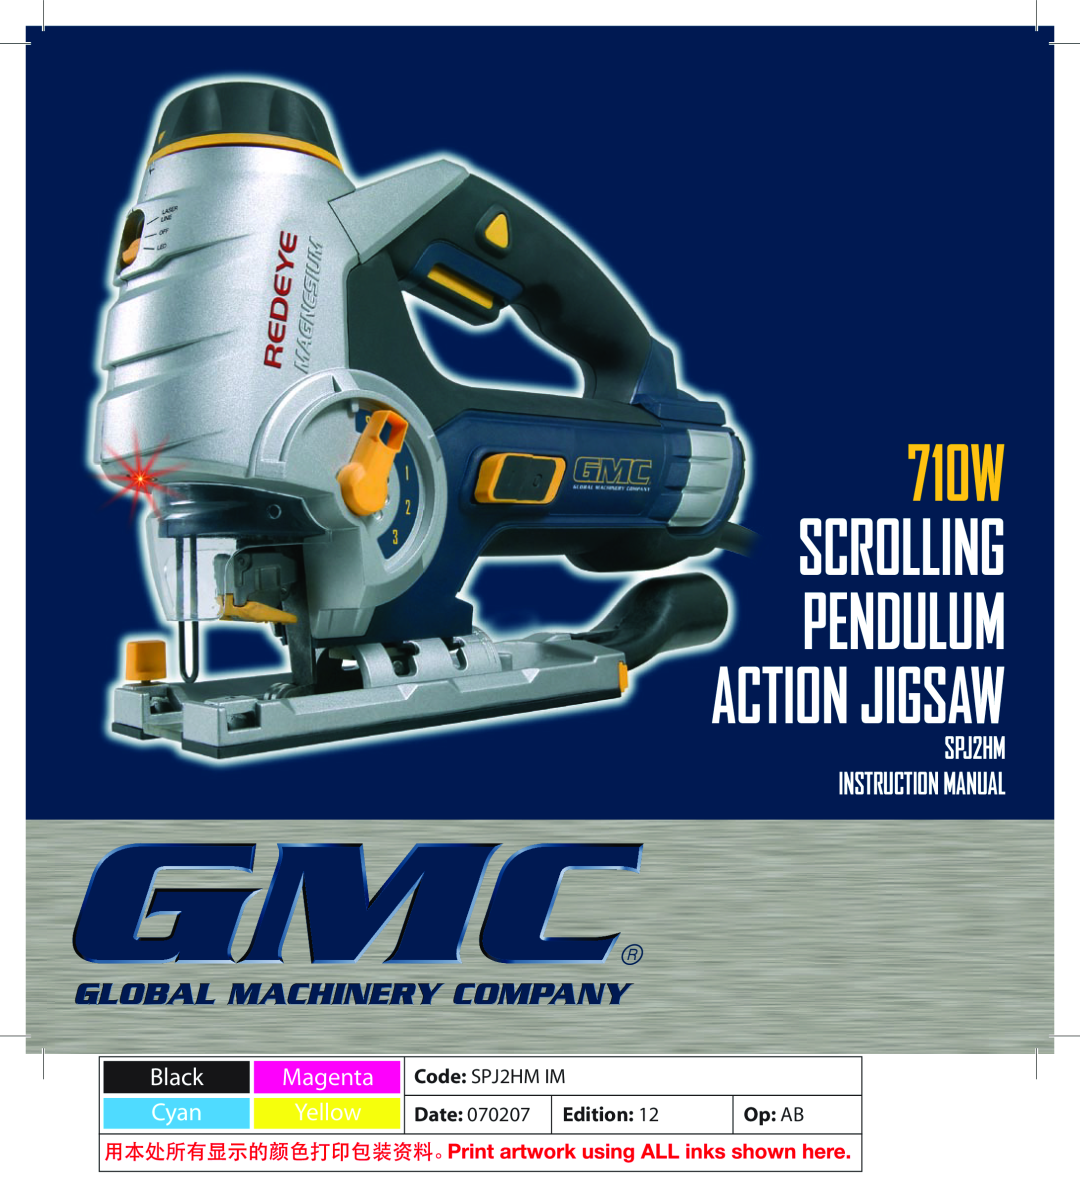 Global Machinery Company instruction manual 710W SCROLLING PENDULUM ACTION JIGSAW, SPJ2HM INSTRUCTION MANUAL, Date 